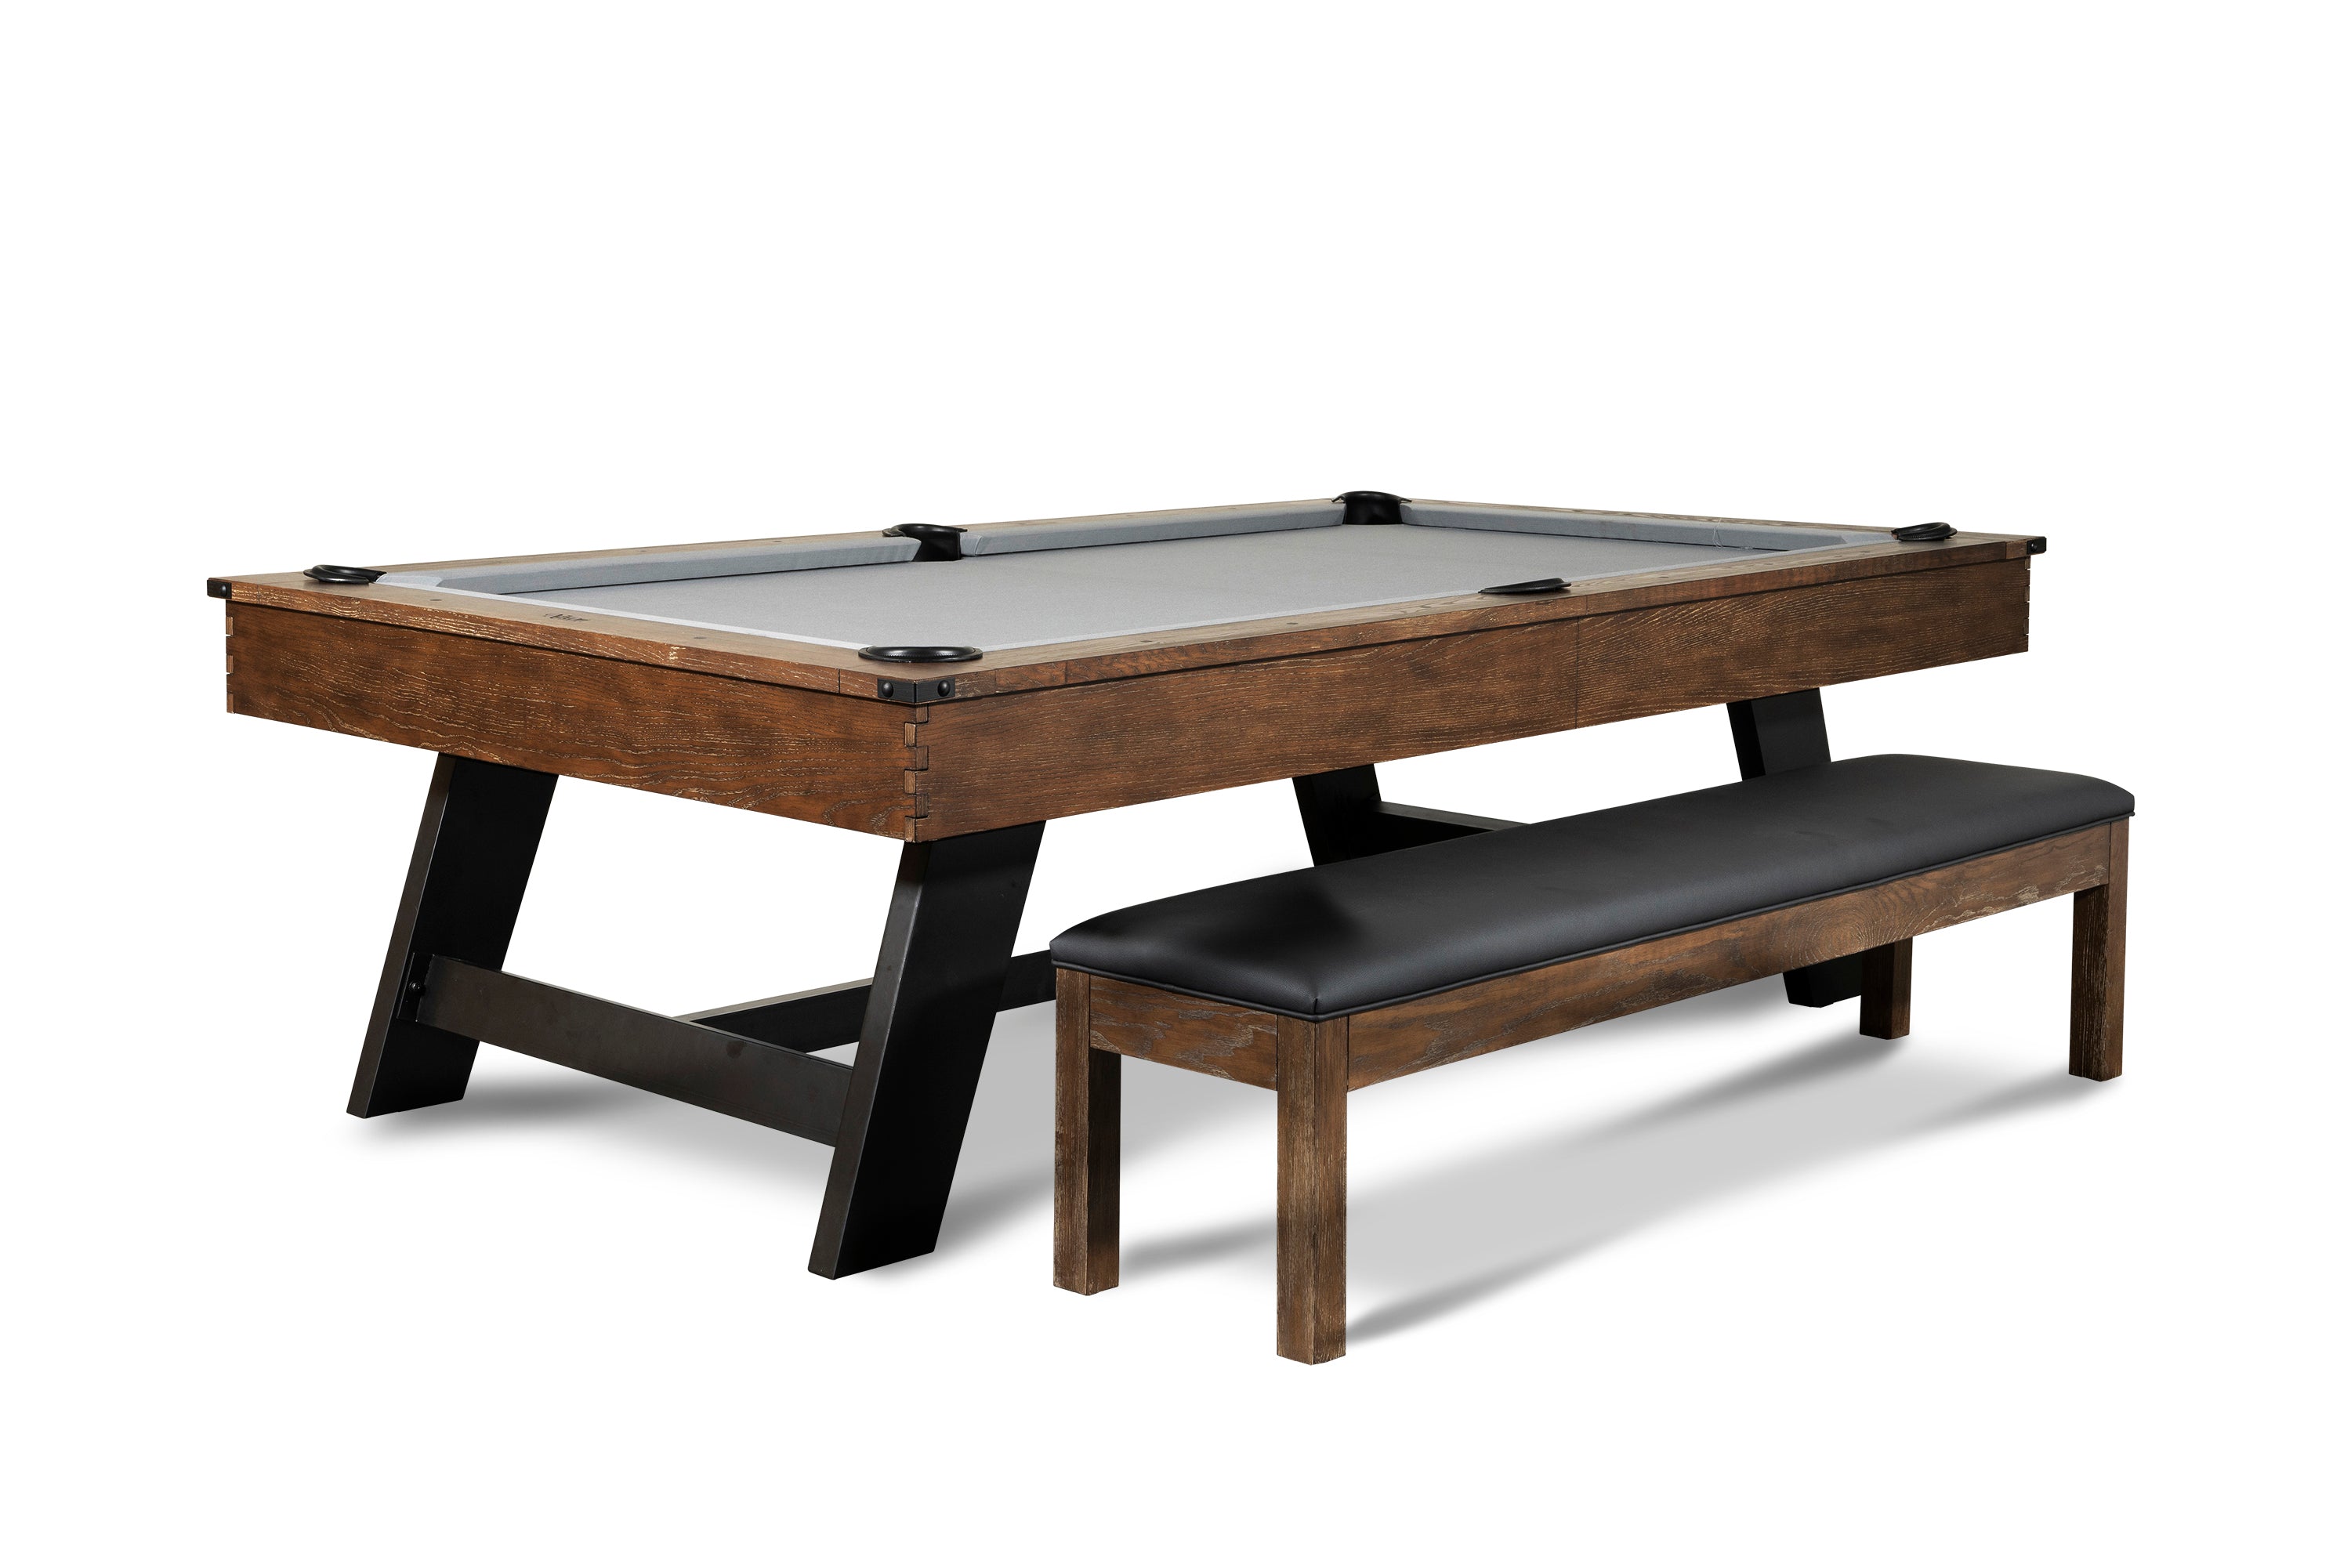 Nixon Hunter Slate Pool Table | Brushed Walnut Finish with Wood Legs | Dining Top Option